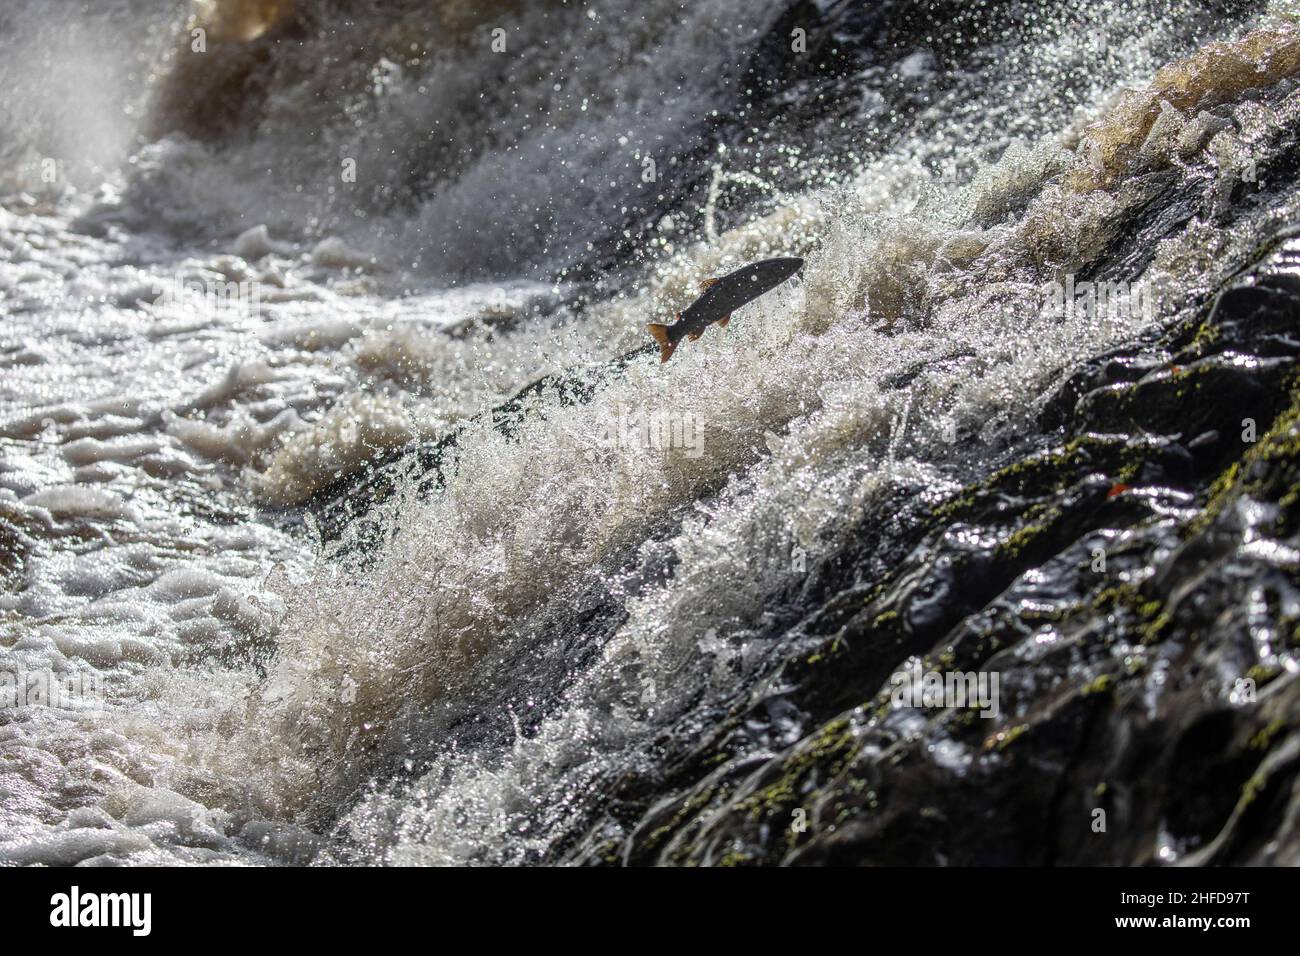 Leaping salmon, Falls of Feugh, Banchory, Scotland Stock Photo